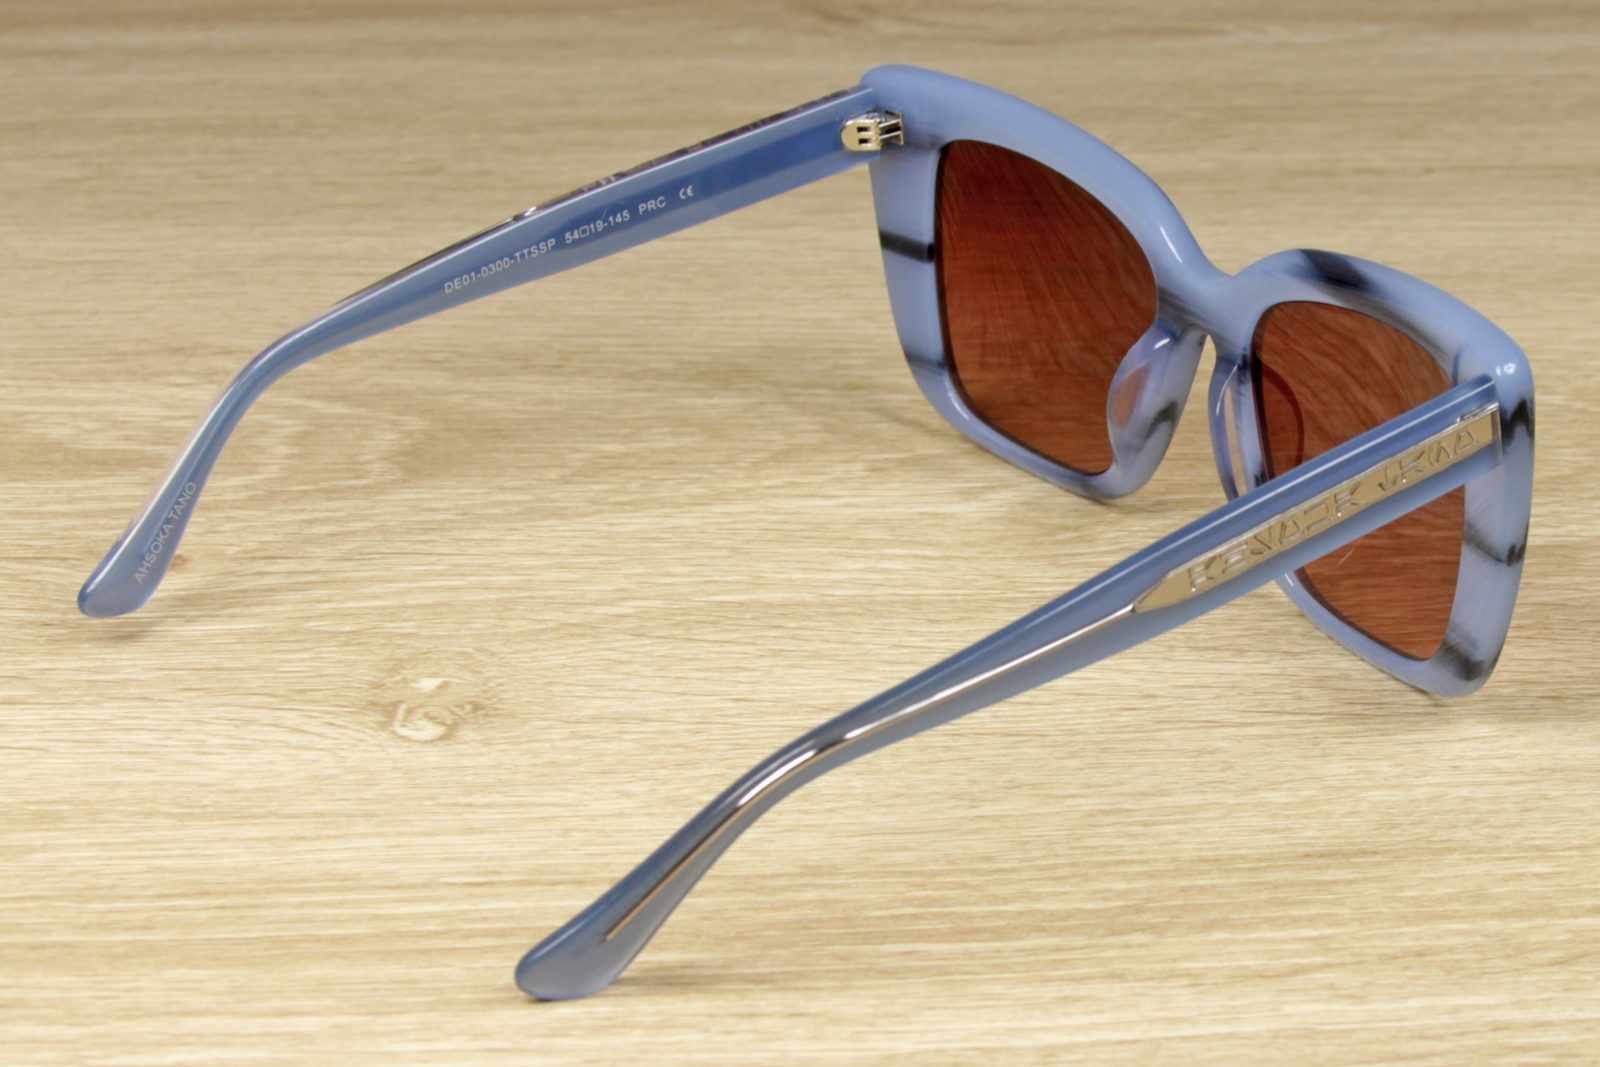 DIFF Eyewear x Star Wars - Ahsoka Sunglasses